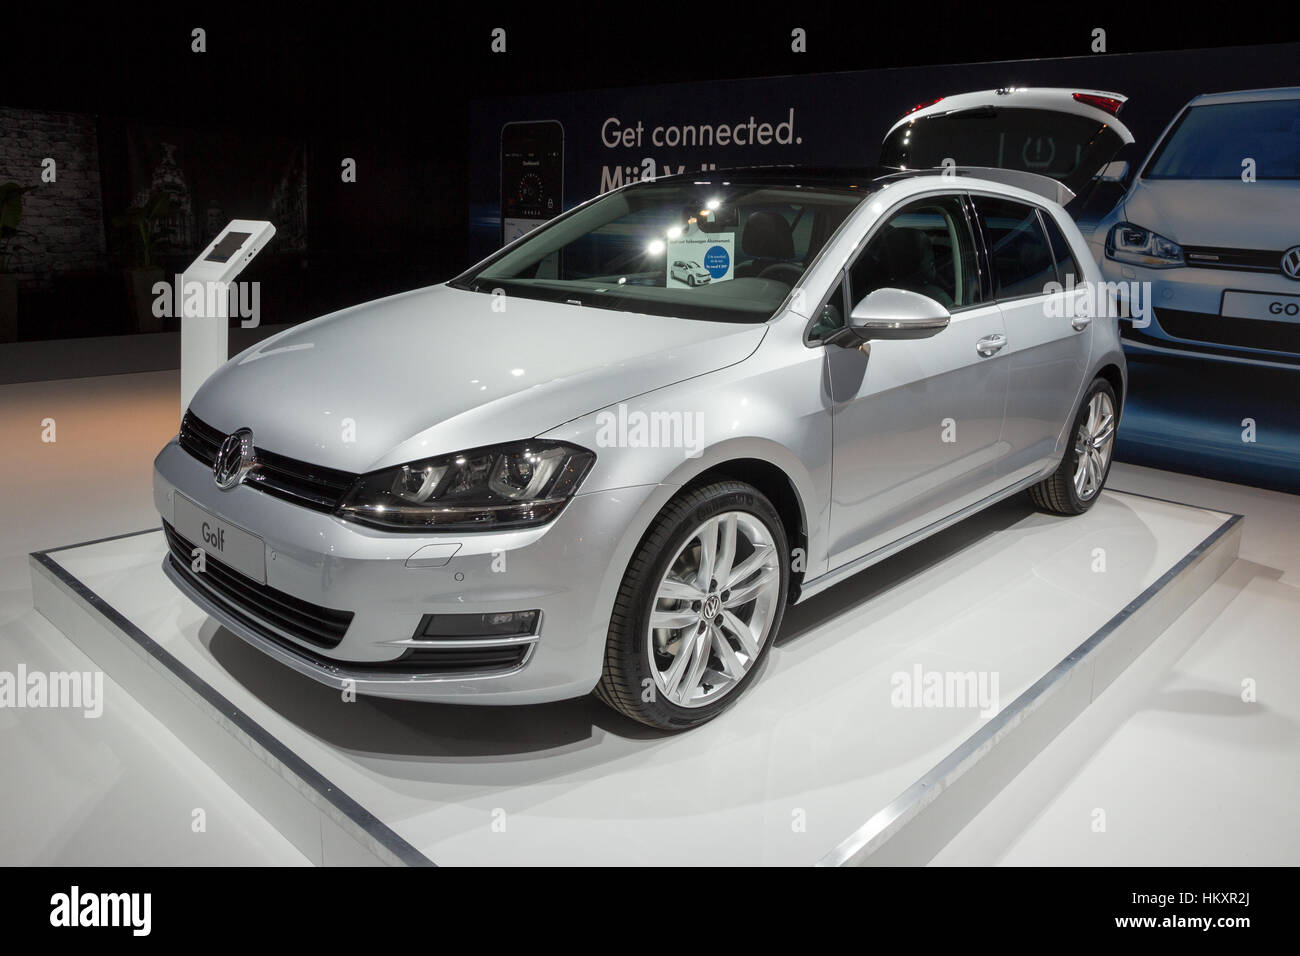 AMSTERDAM - APRIL 16, 2015: New Volkswagen Golf at the Amsterdam AutoRAI Motor Show. Stock Photo